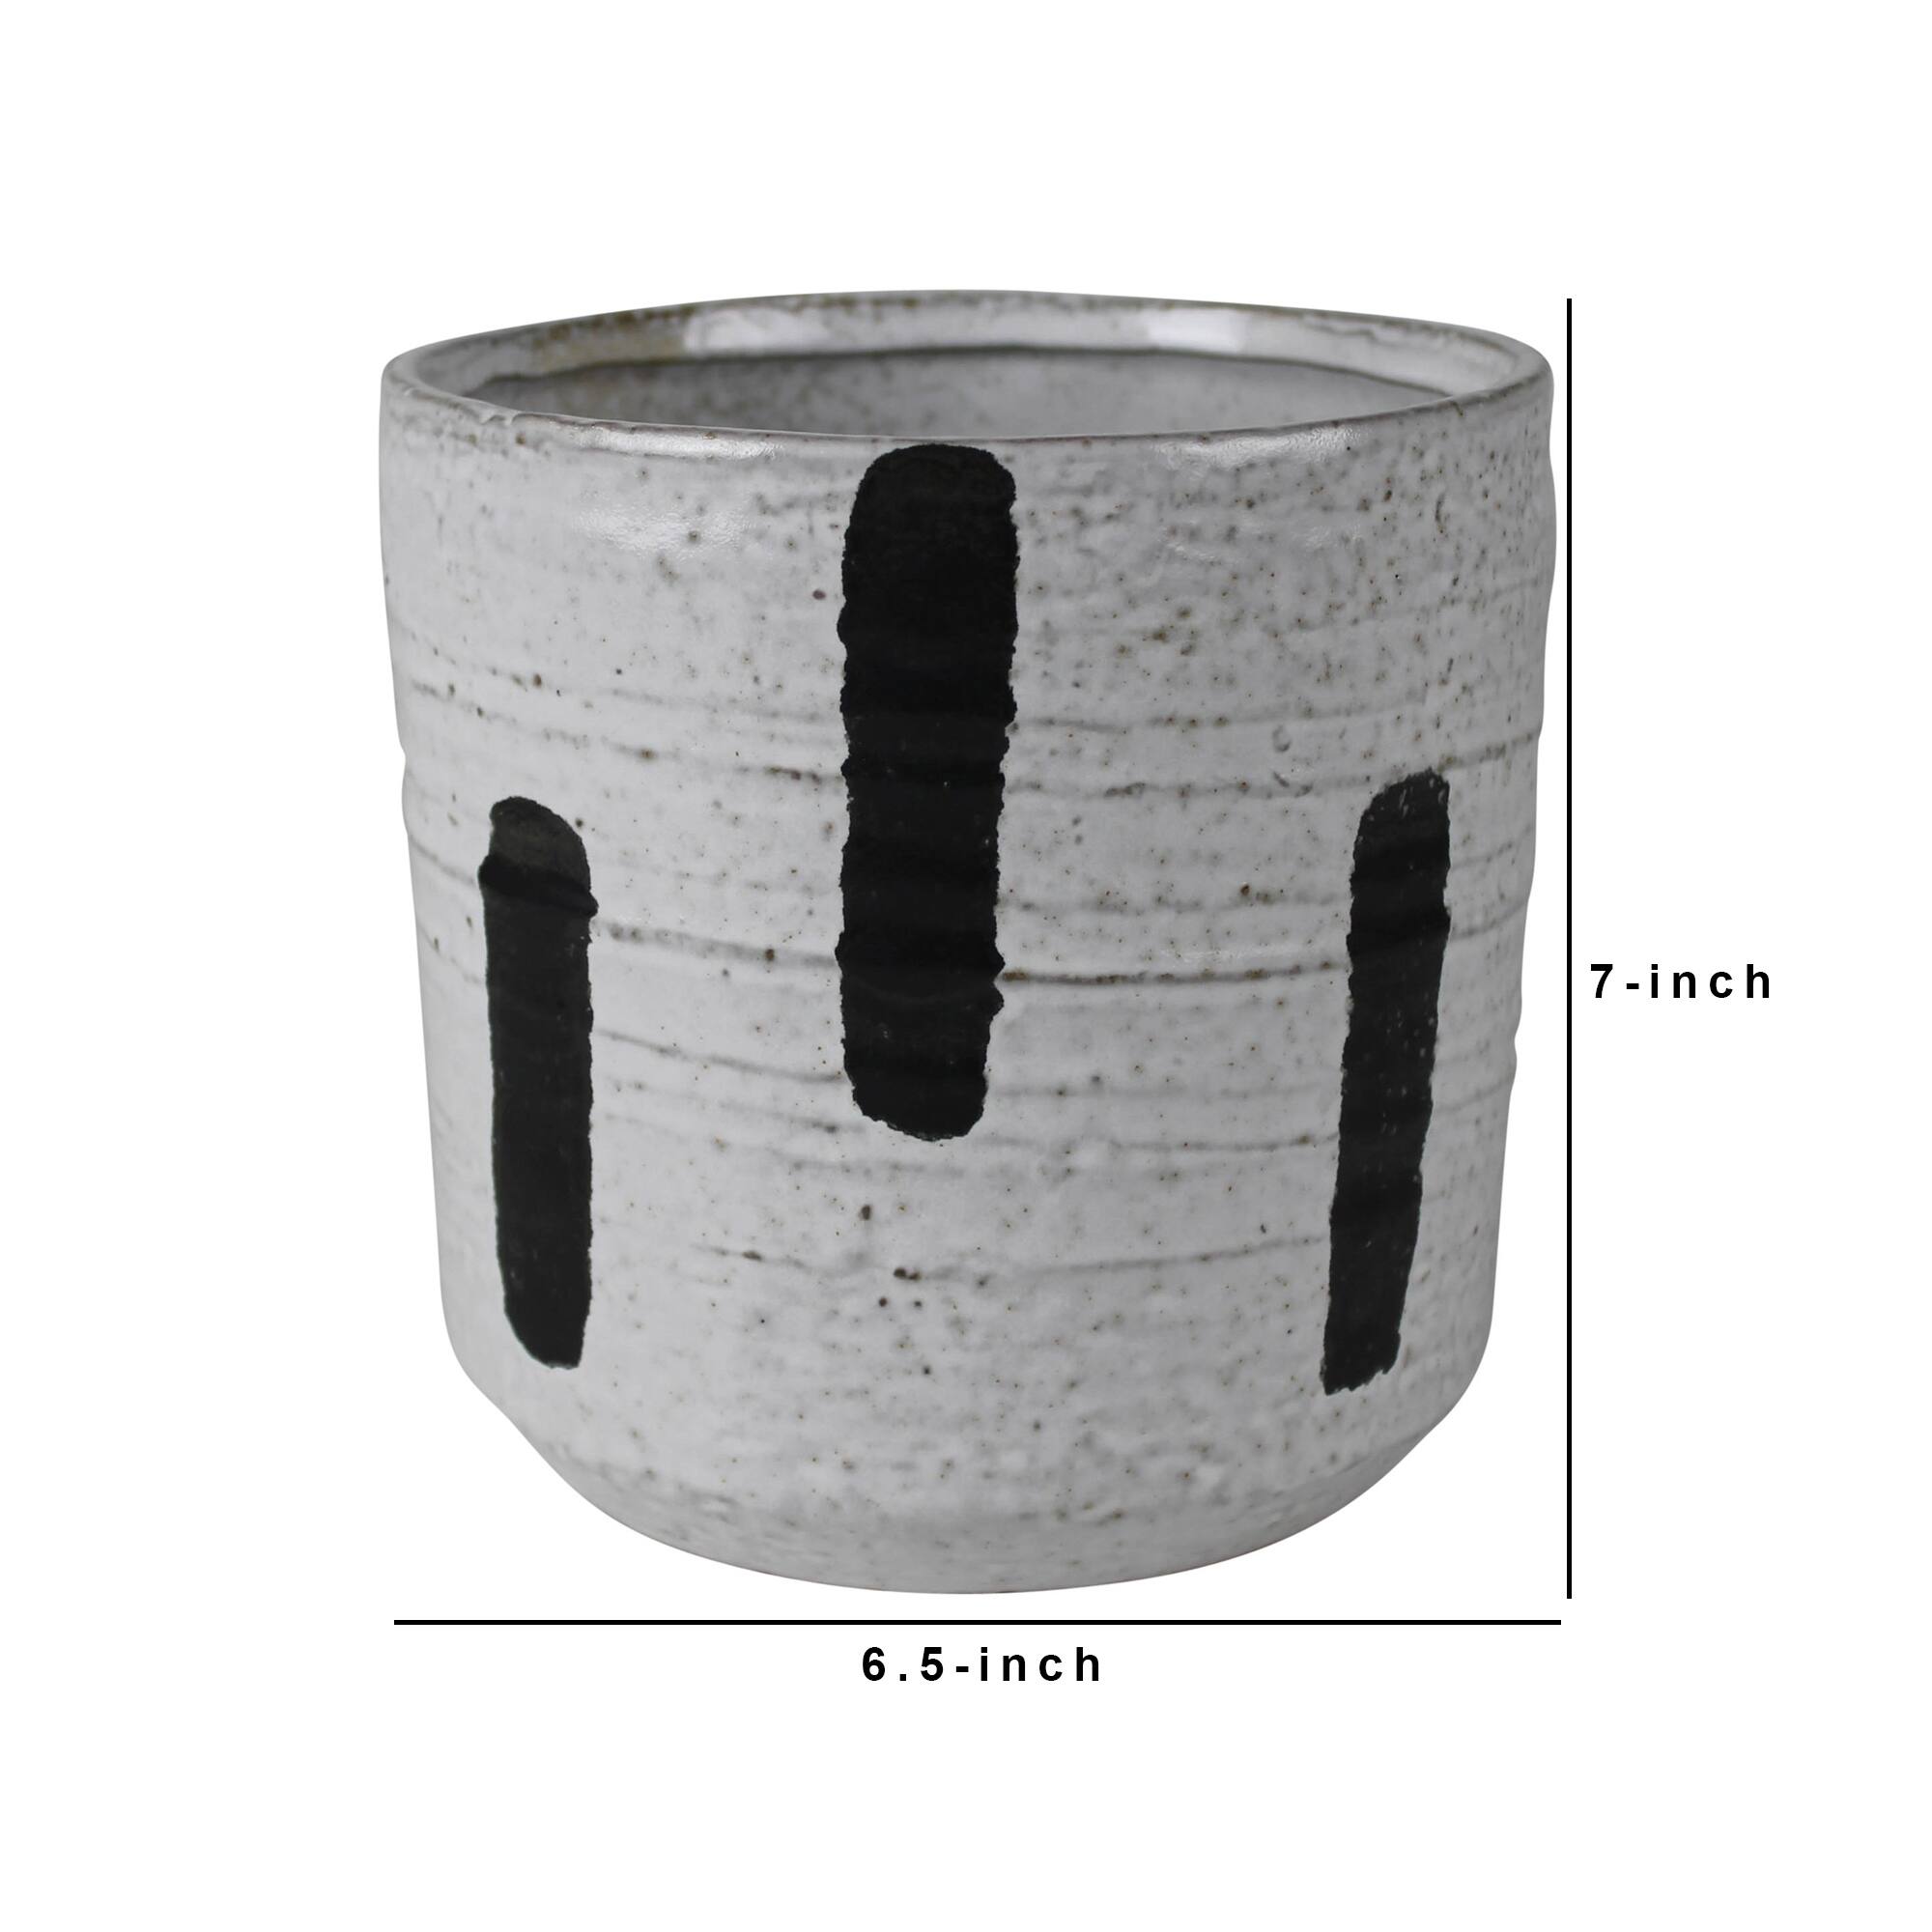 Ceramic Cachepot with Alternate Stripes Pattern, Large, Set of 4, Gray